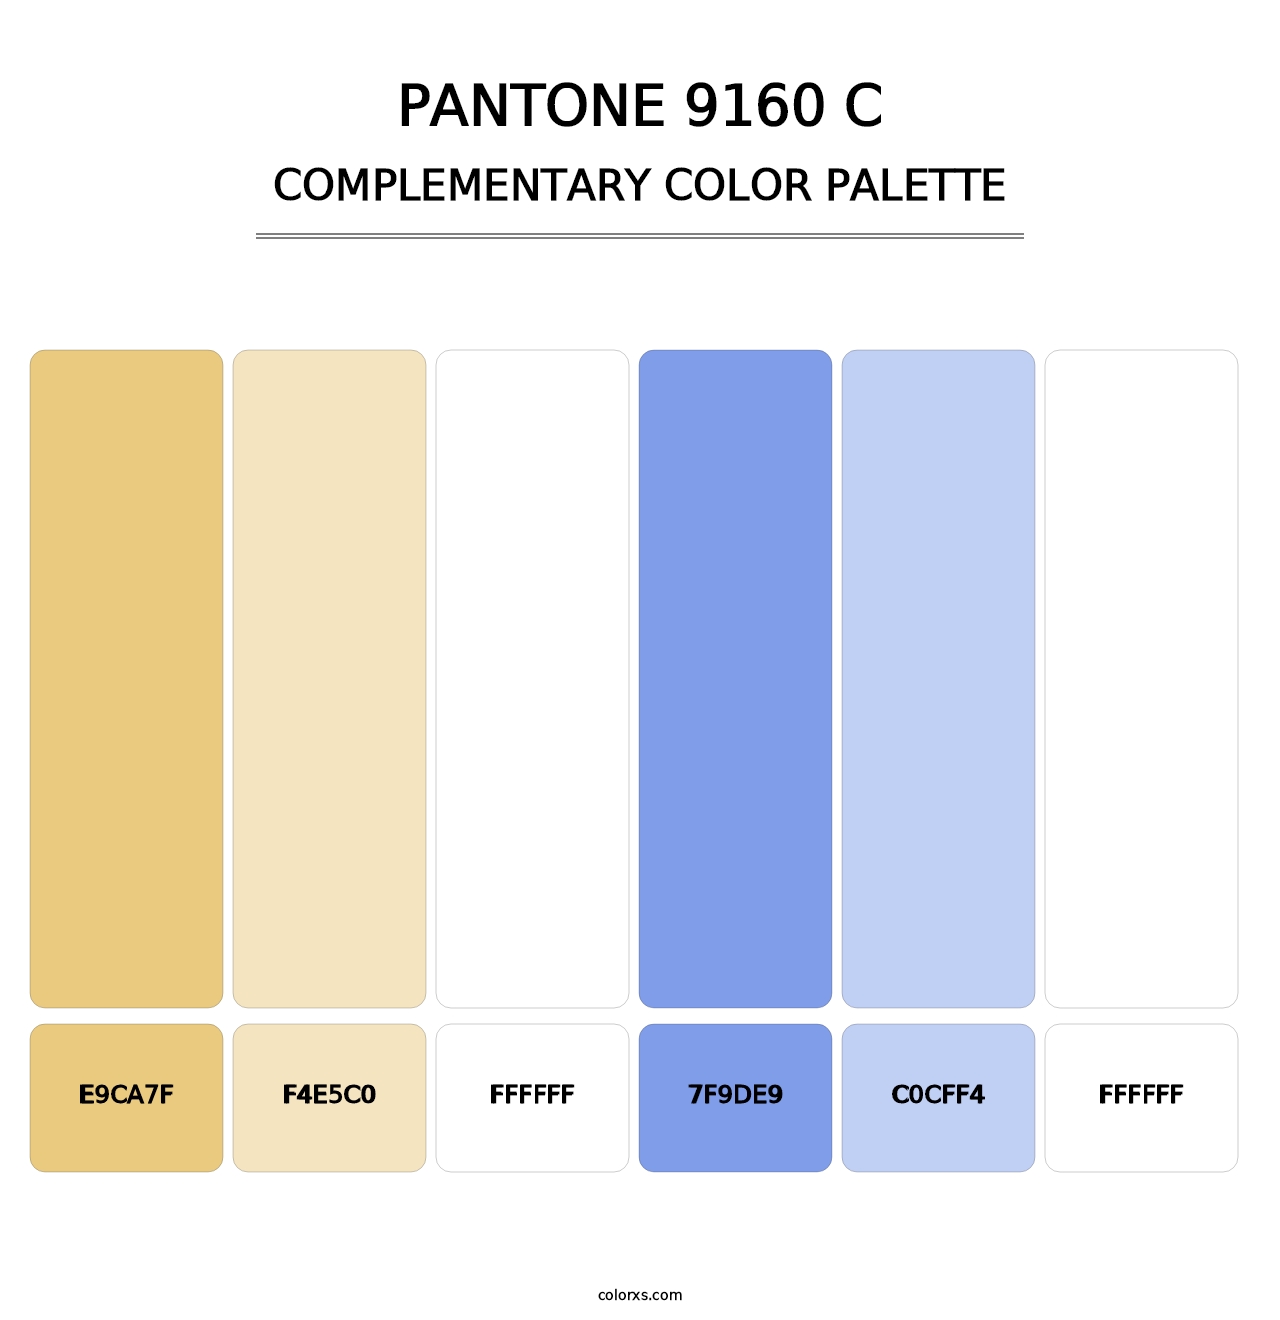 PANTONE 9160 C - Complementary Color Palette